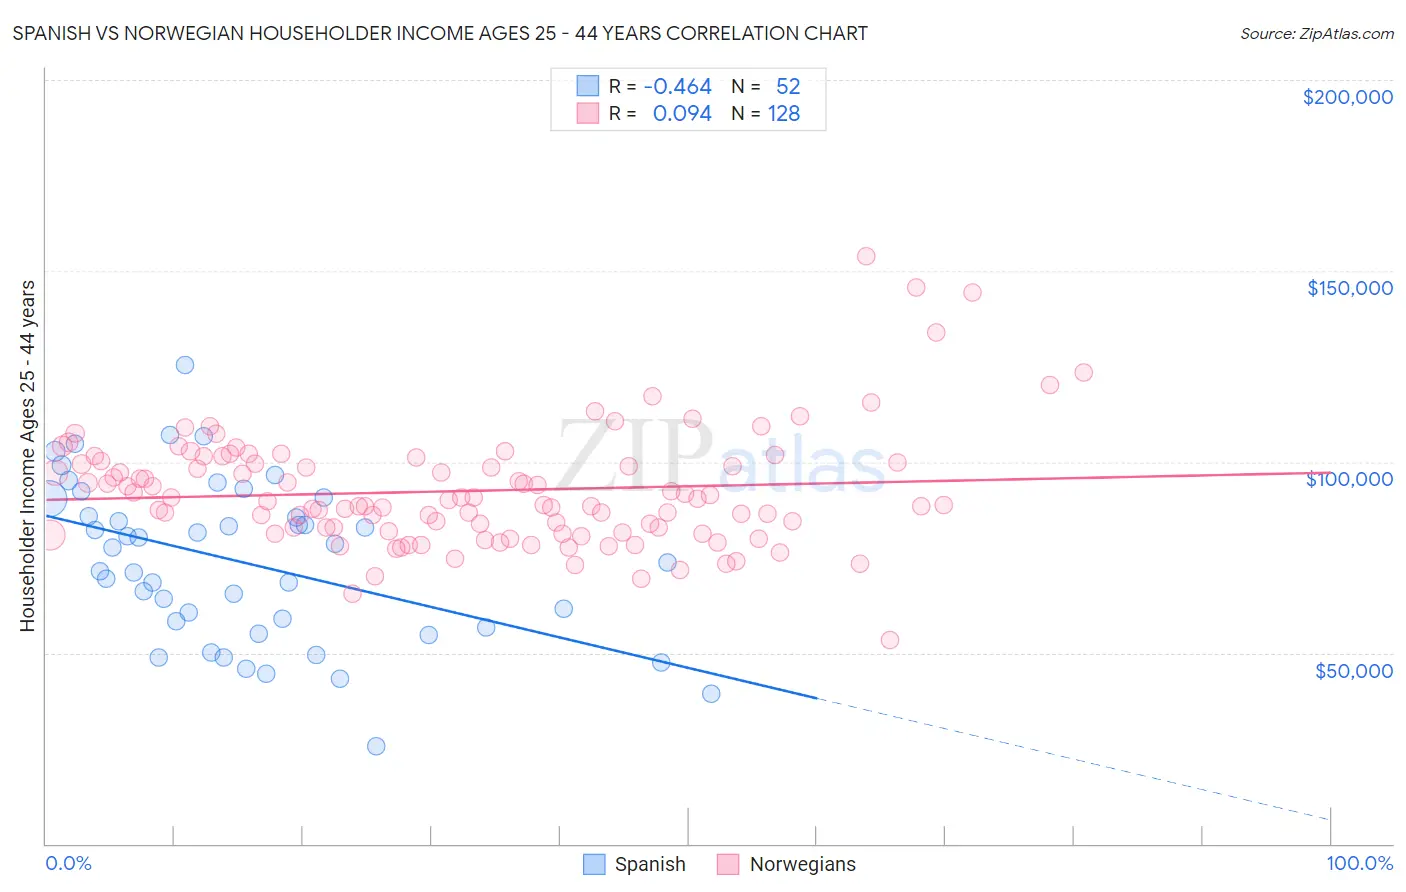 Spanish vs Norwegian Householder Income Ages 25 - 44 years